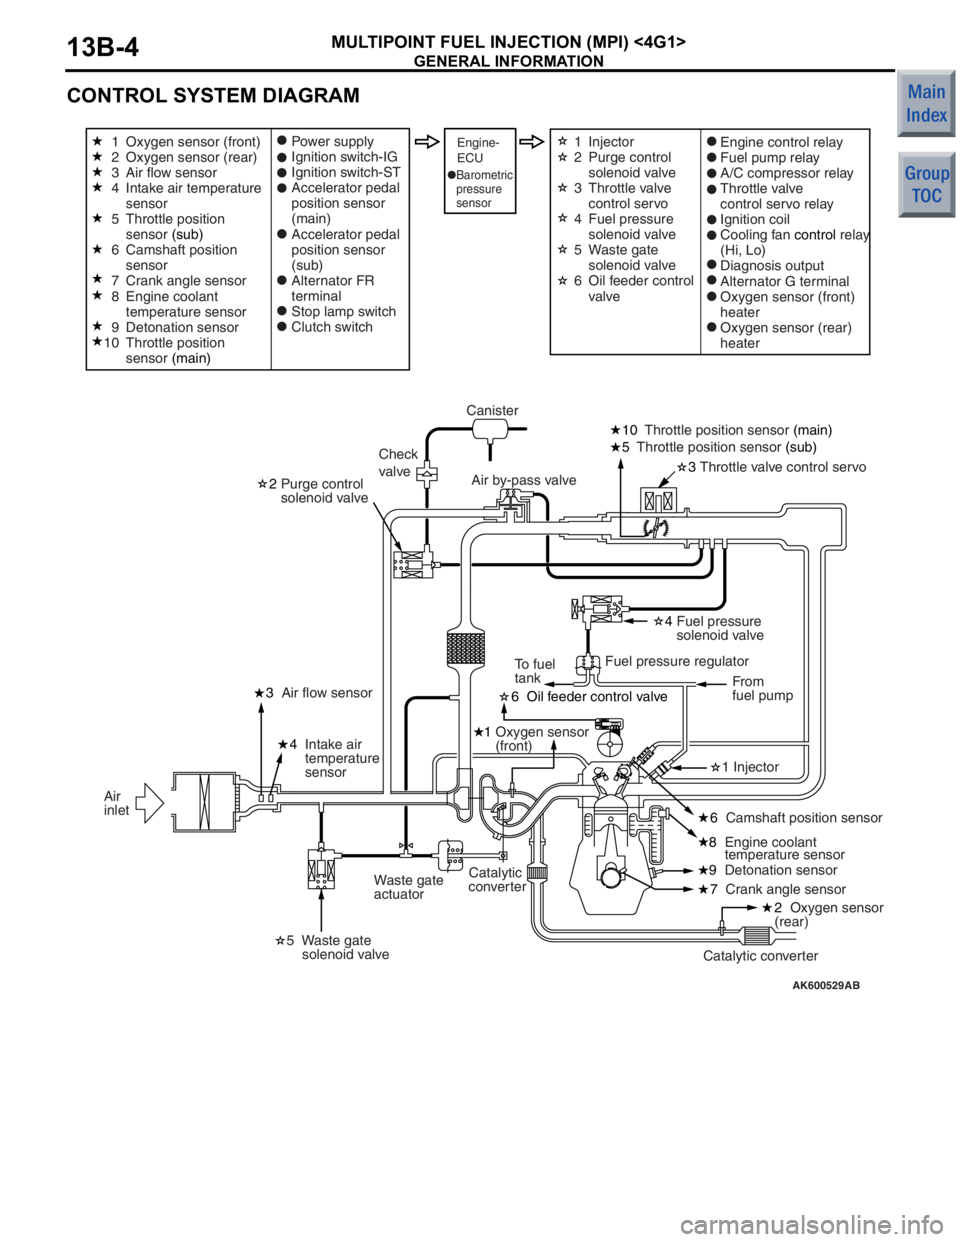 MITSUBISHI COLT 2006  Service Repair Manual 
GENERAL INFORMATION
MULTIPOINT FUEL INJECTION (MPI) <4G1>13B-4
CONTROL SYSTEM DIAGRAM
AK600529AB
6  Oil feeder control valve 
1  Oxygen sensor
(front)
8  Engine coolant 
 temperature sensor
3 
Thrott